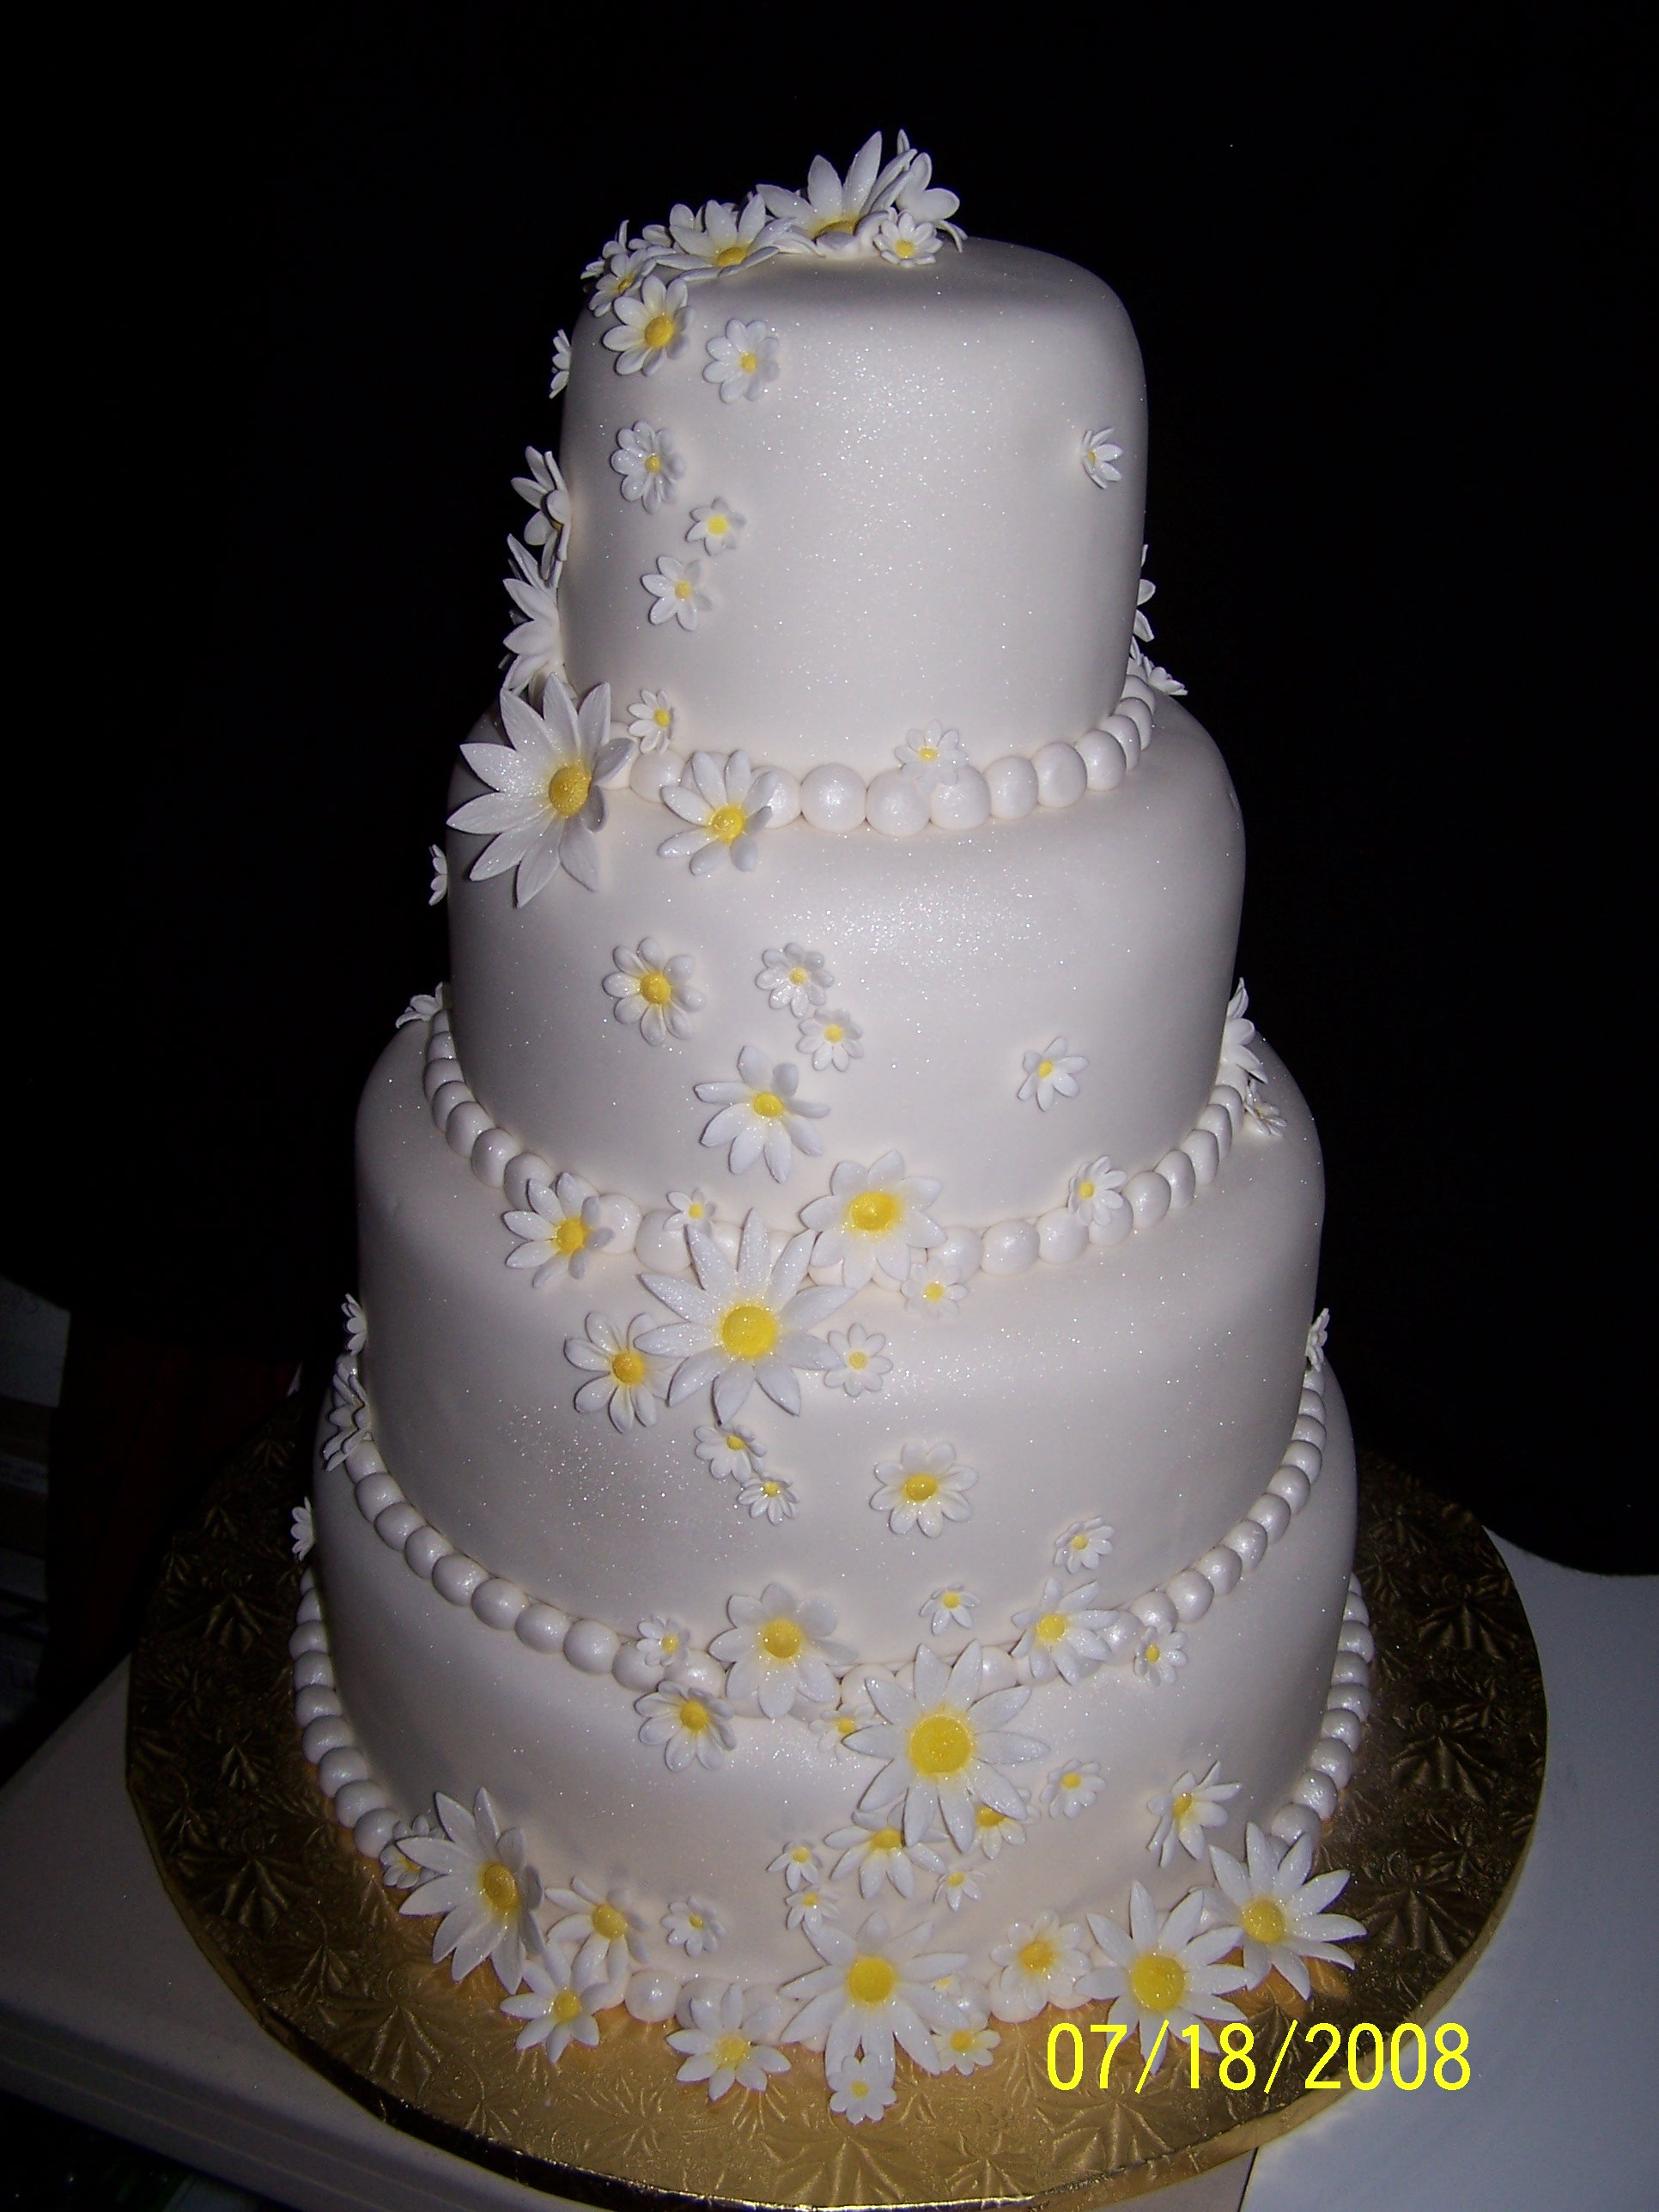 Wedding Cakes With Daisies
 Daisy wedding cakes idea in 2017